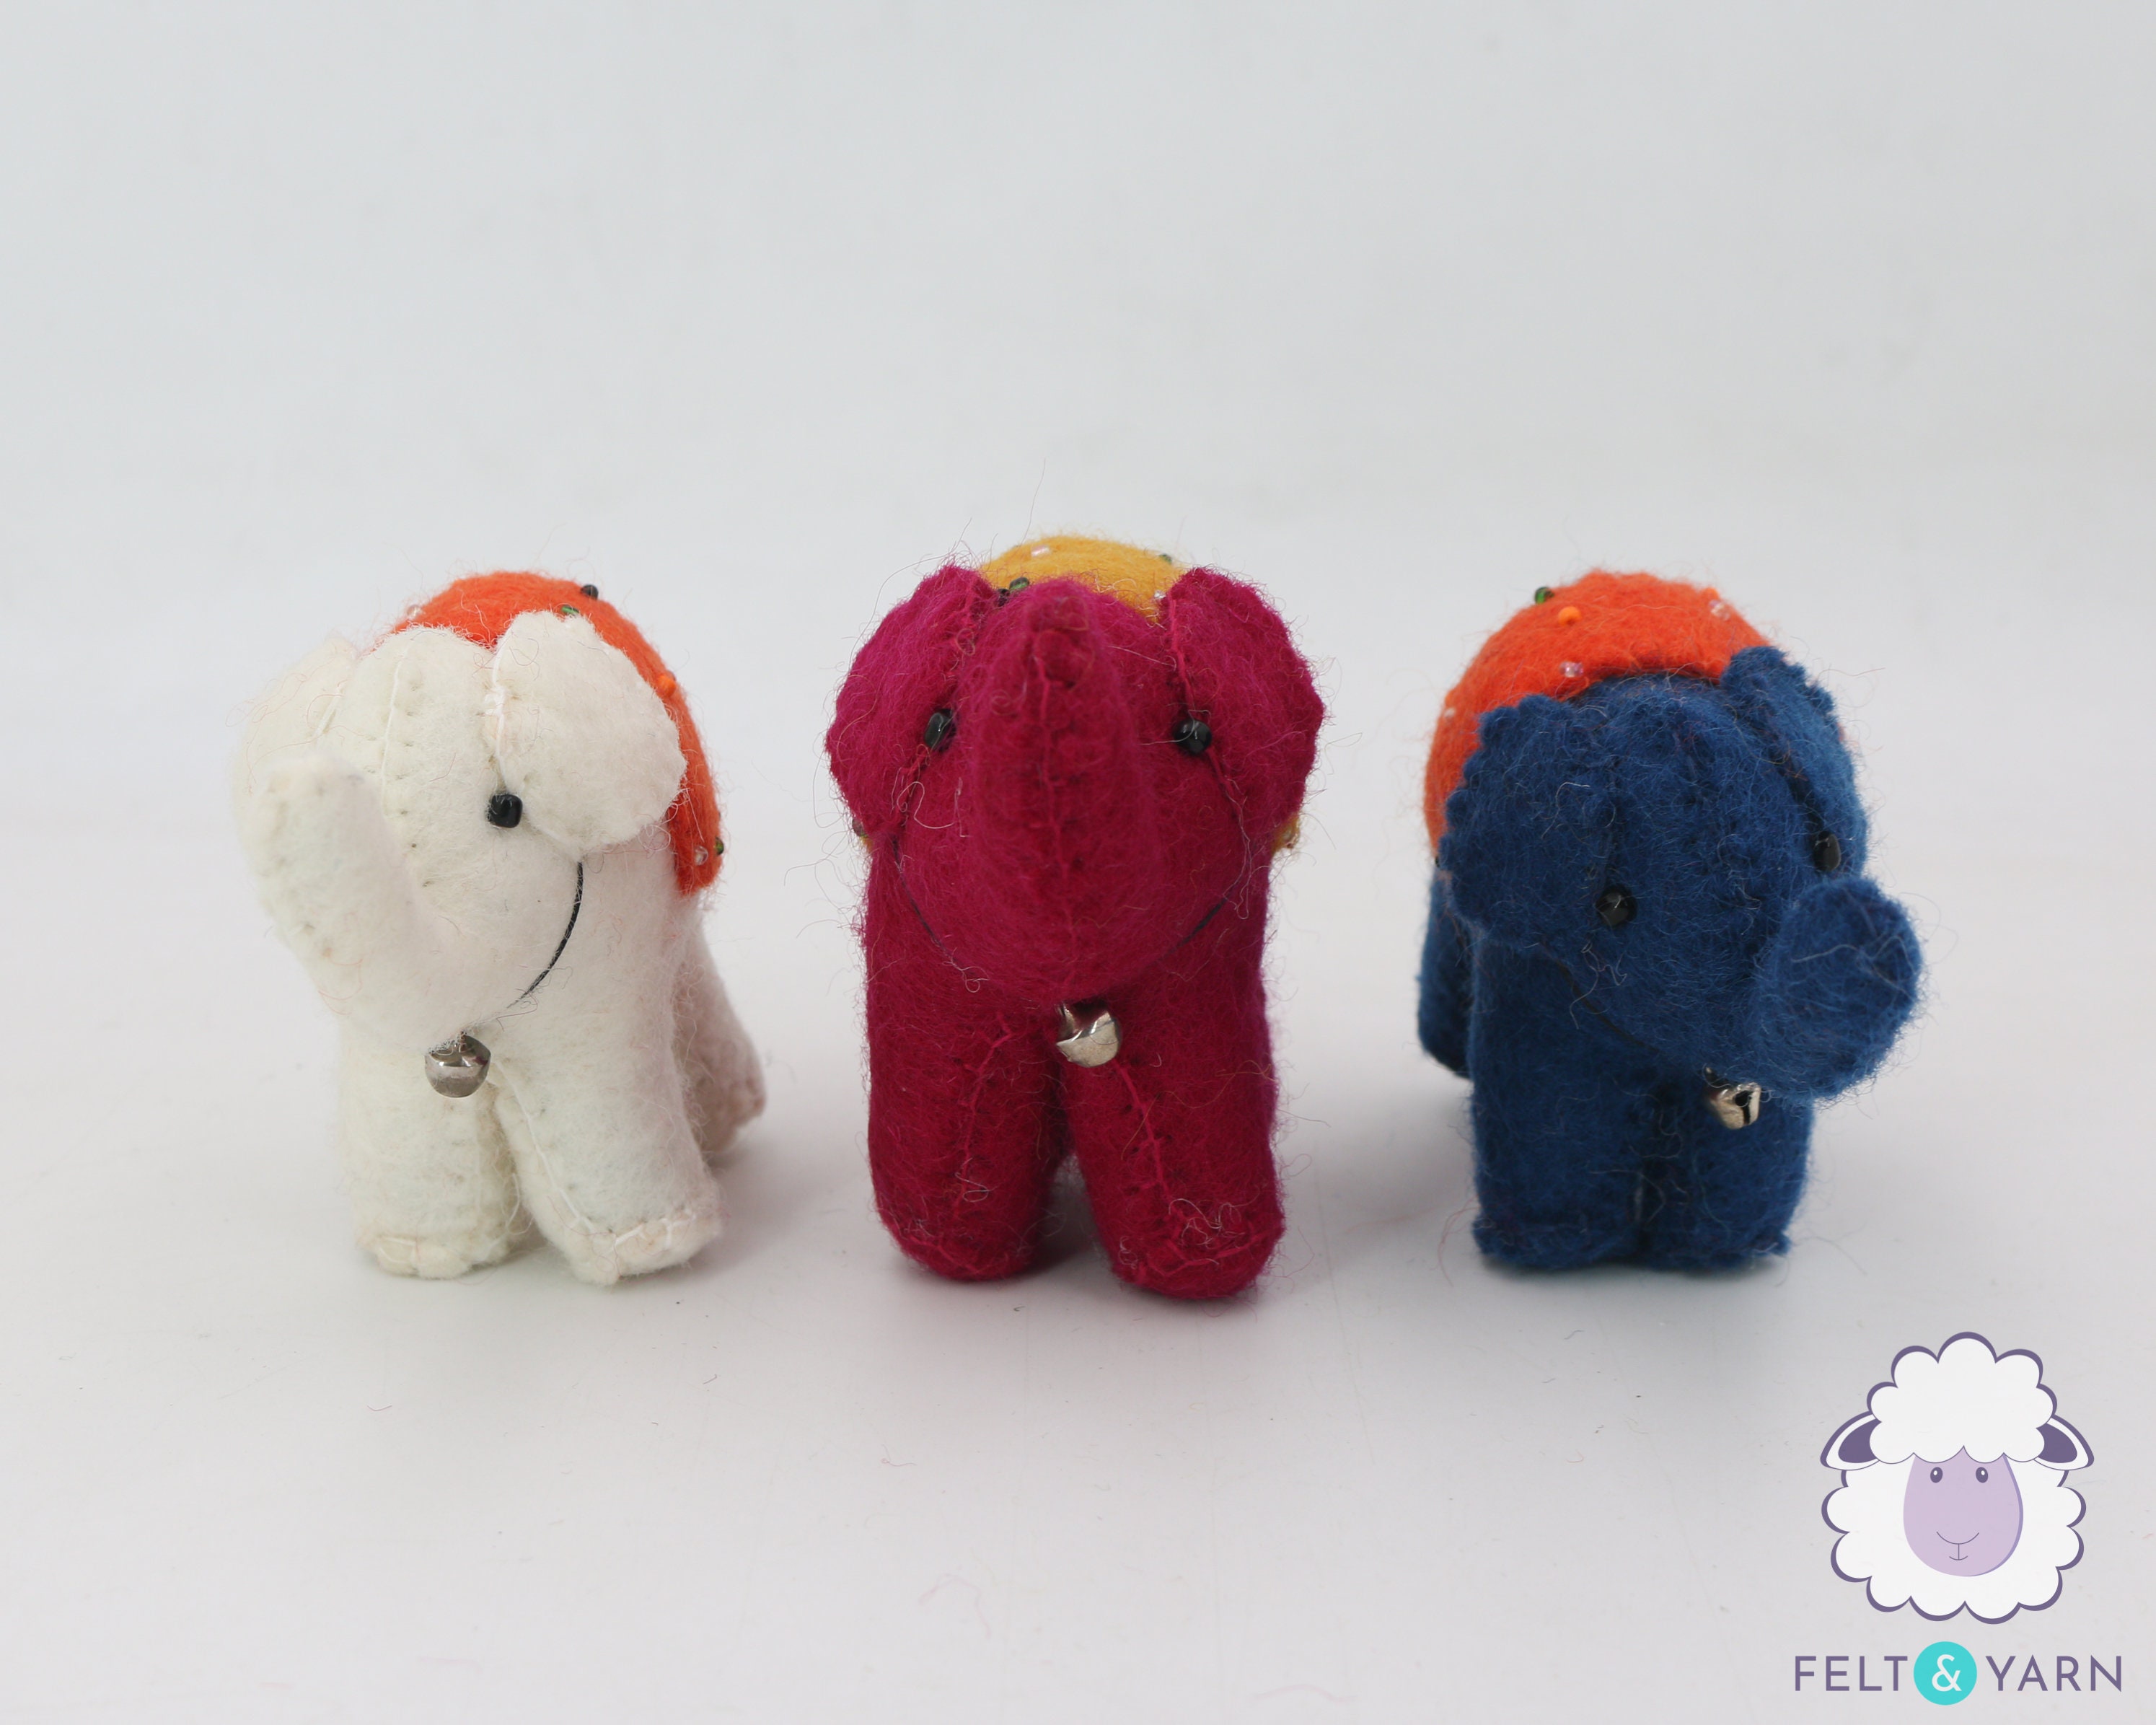 10 Pcs 8.5cm Wool Felt Red, White & Blue Elephant Puffy Pet Play Dog Toys Fair Trade Handmade